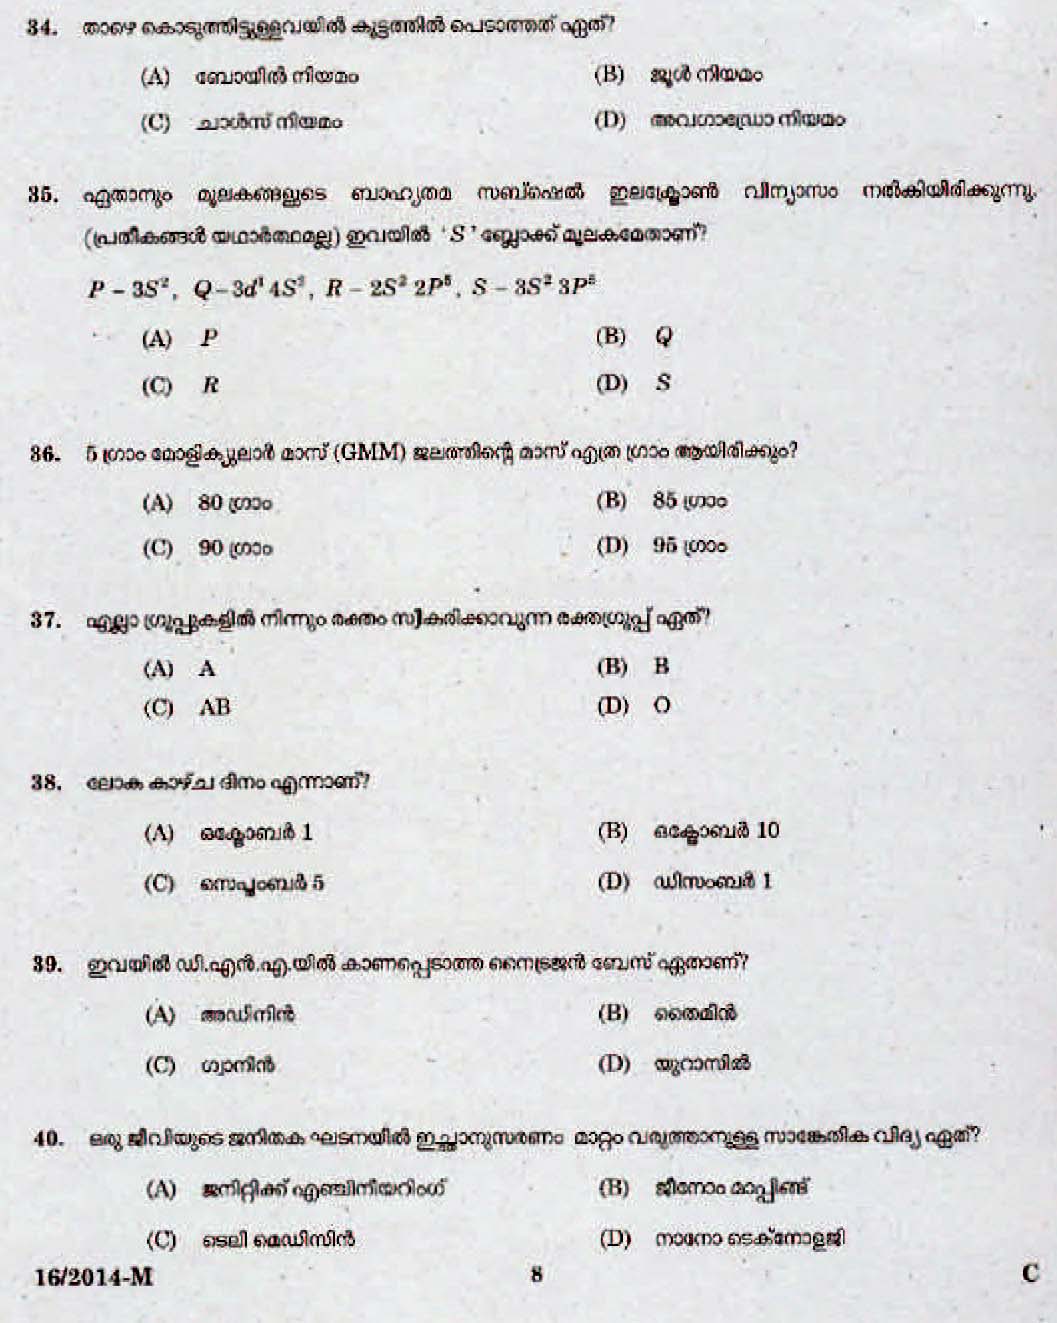 LD Clerk Kottayam Question Paper Malayalam 2014 Paper Code 162014 M 7